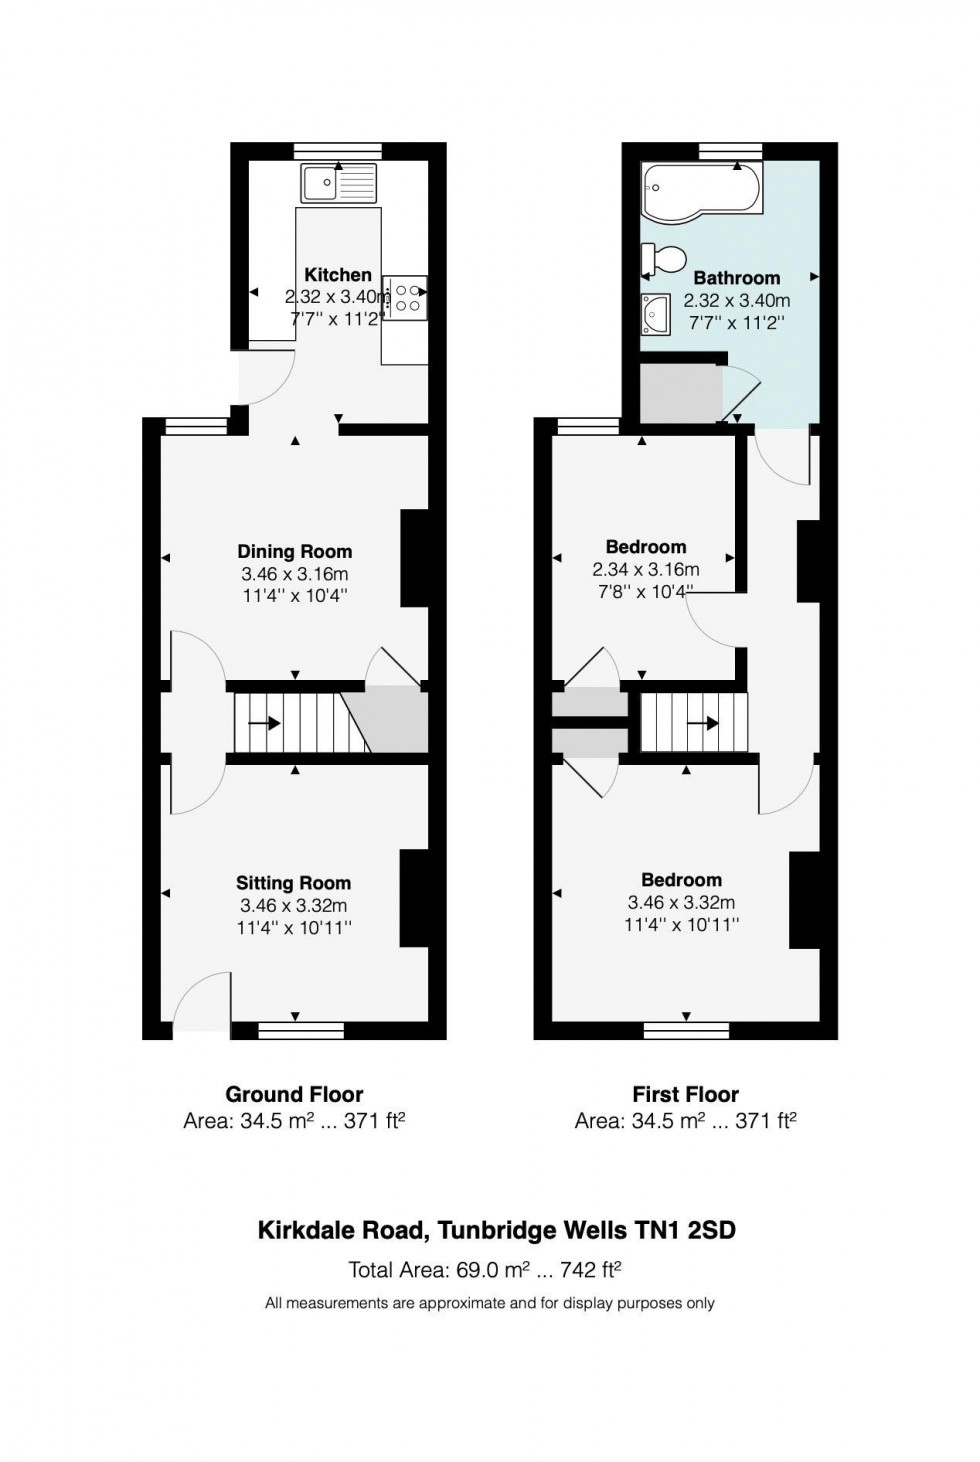 Floorplan for 2 Bedroom End of Terrace House with Garden, Kirkdale Road, Tunbridge Wells